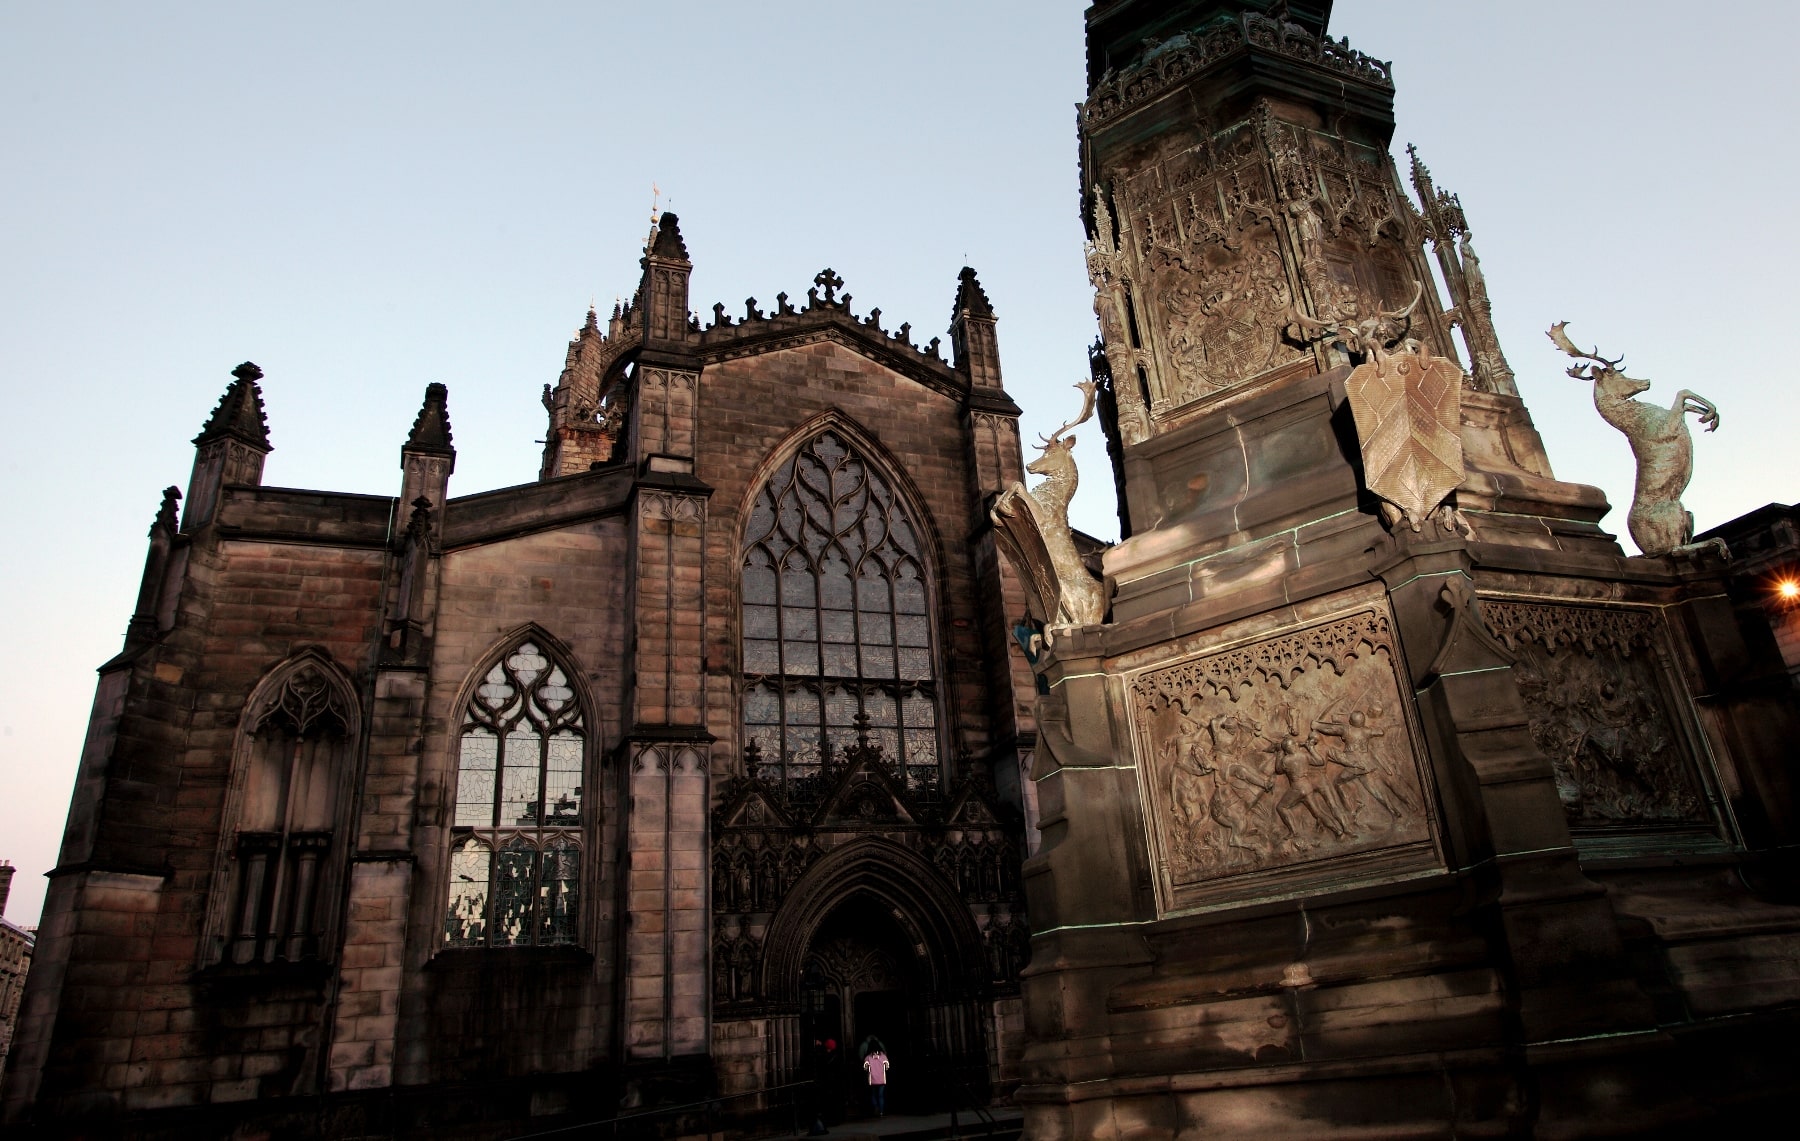 St Giles Cathedral in Edinburgh, Scotland